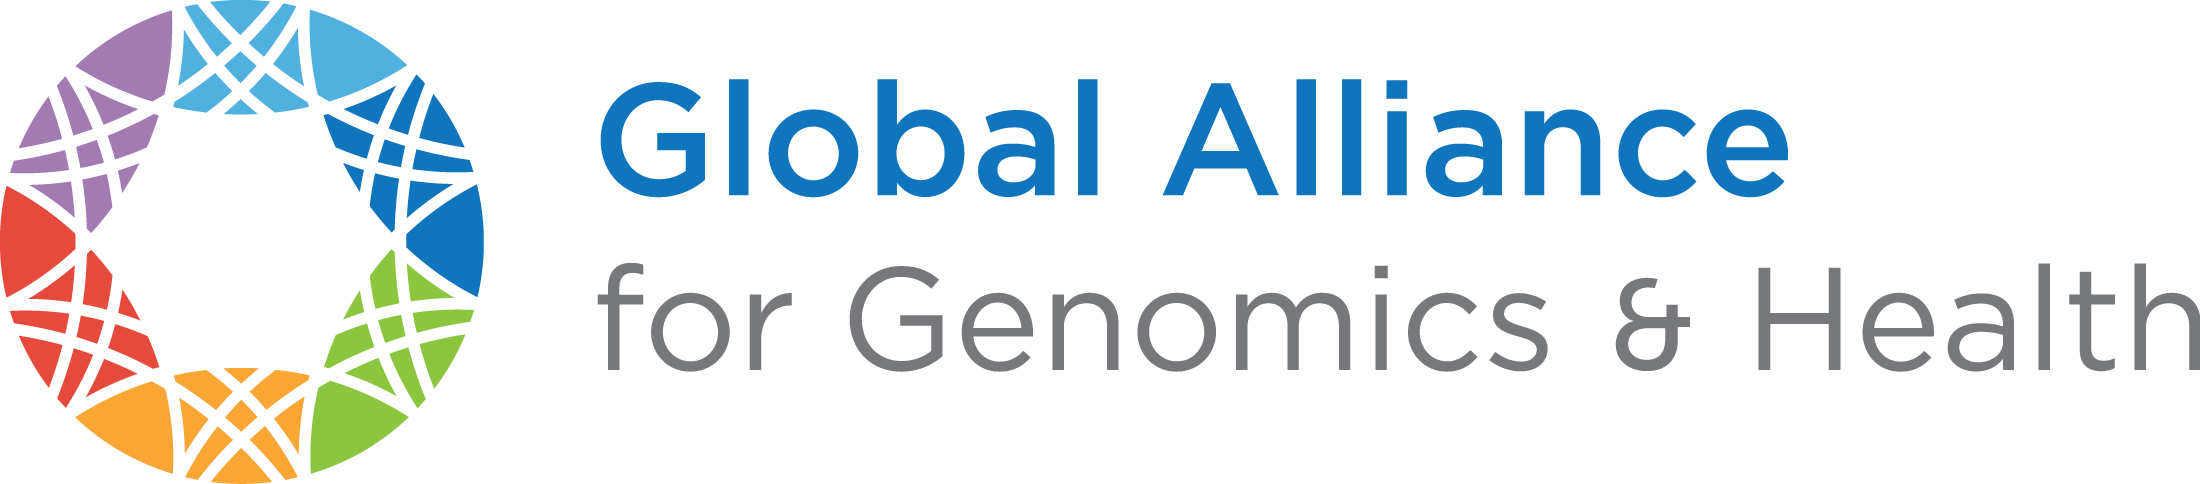 Global Alliance for Genomics & Health